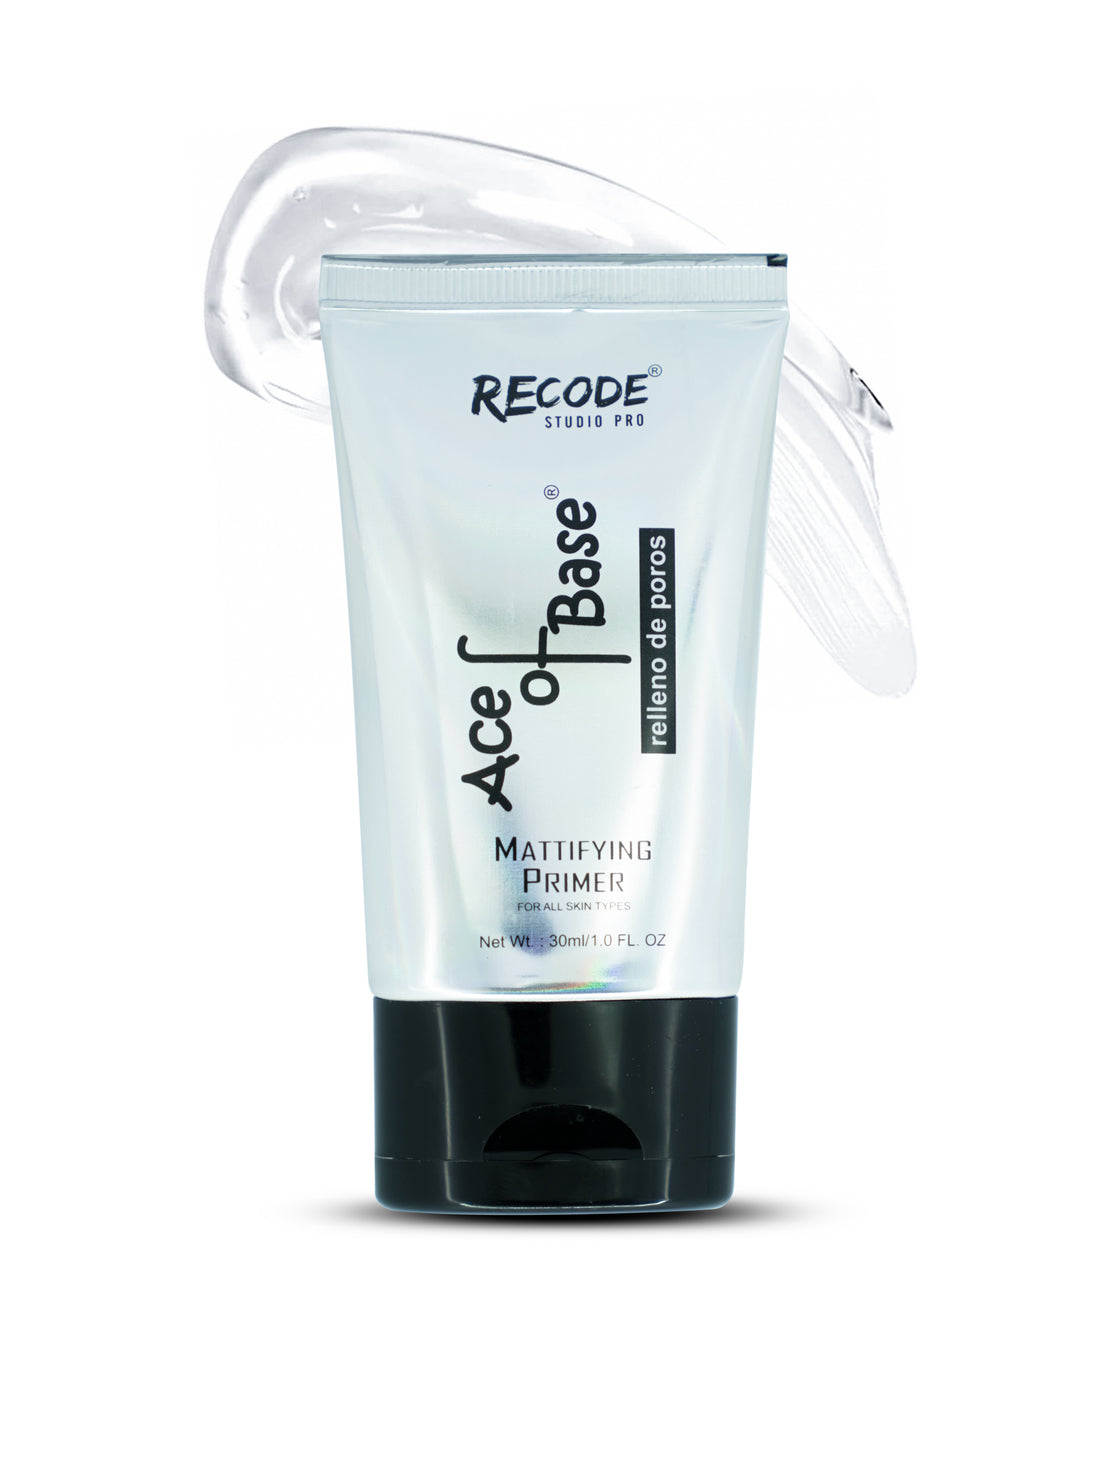 Recode Makeup Primer 30 ml for Oily Skin & Dry Skin 30 ml - Ace Of Base Primer